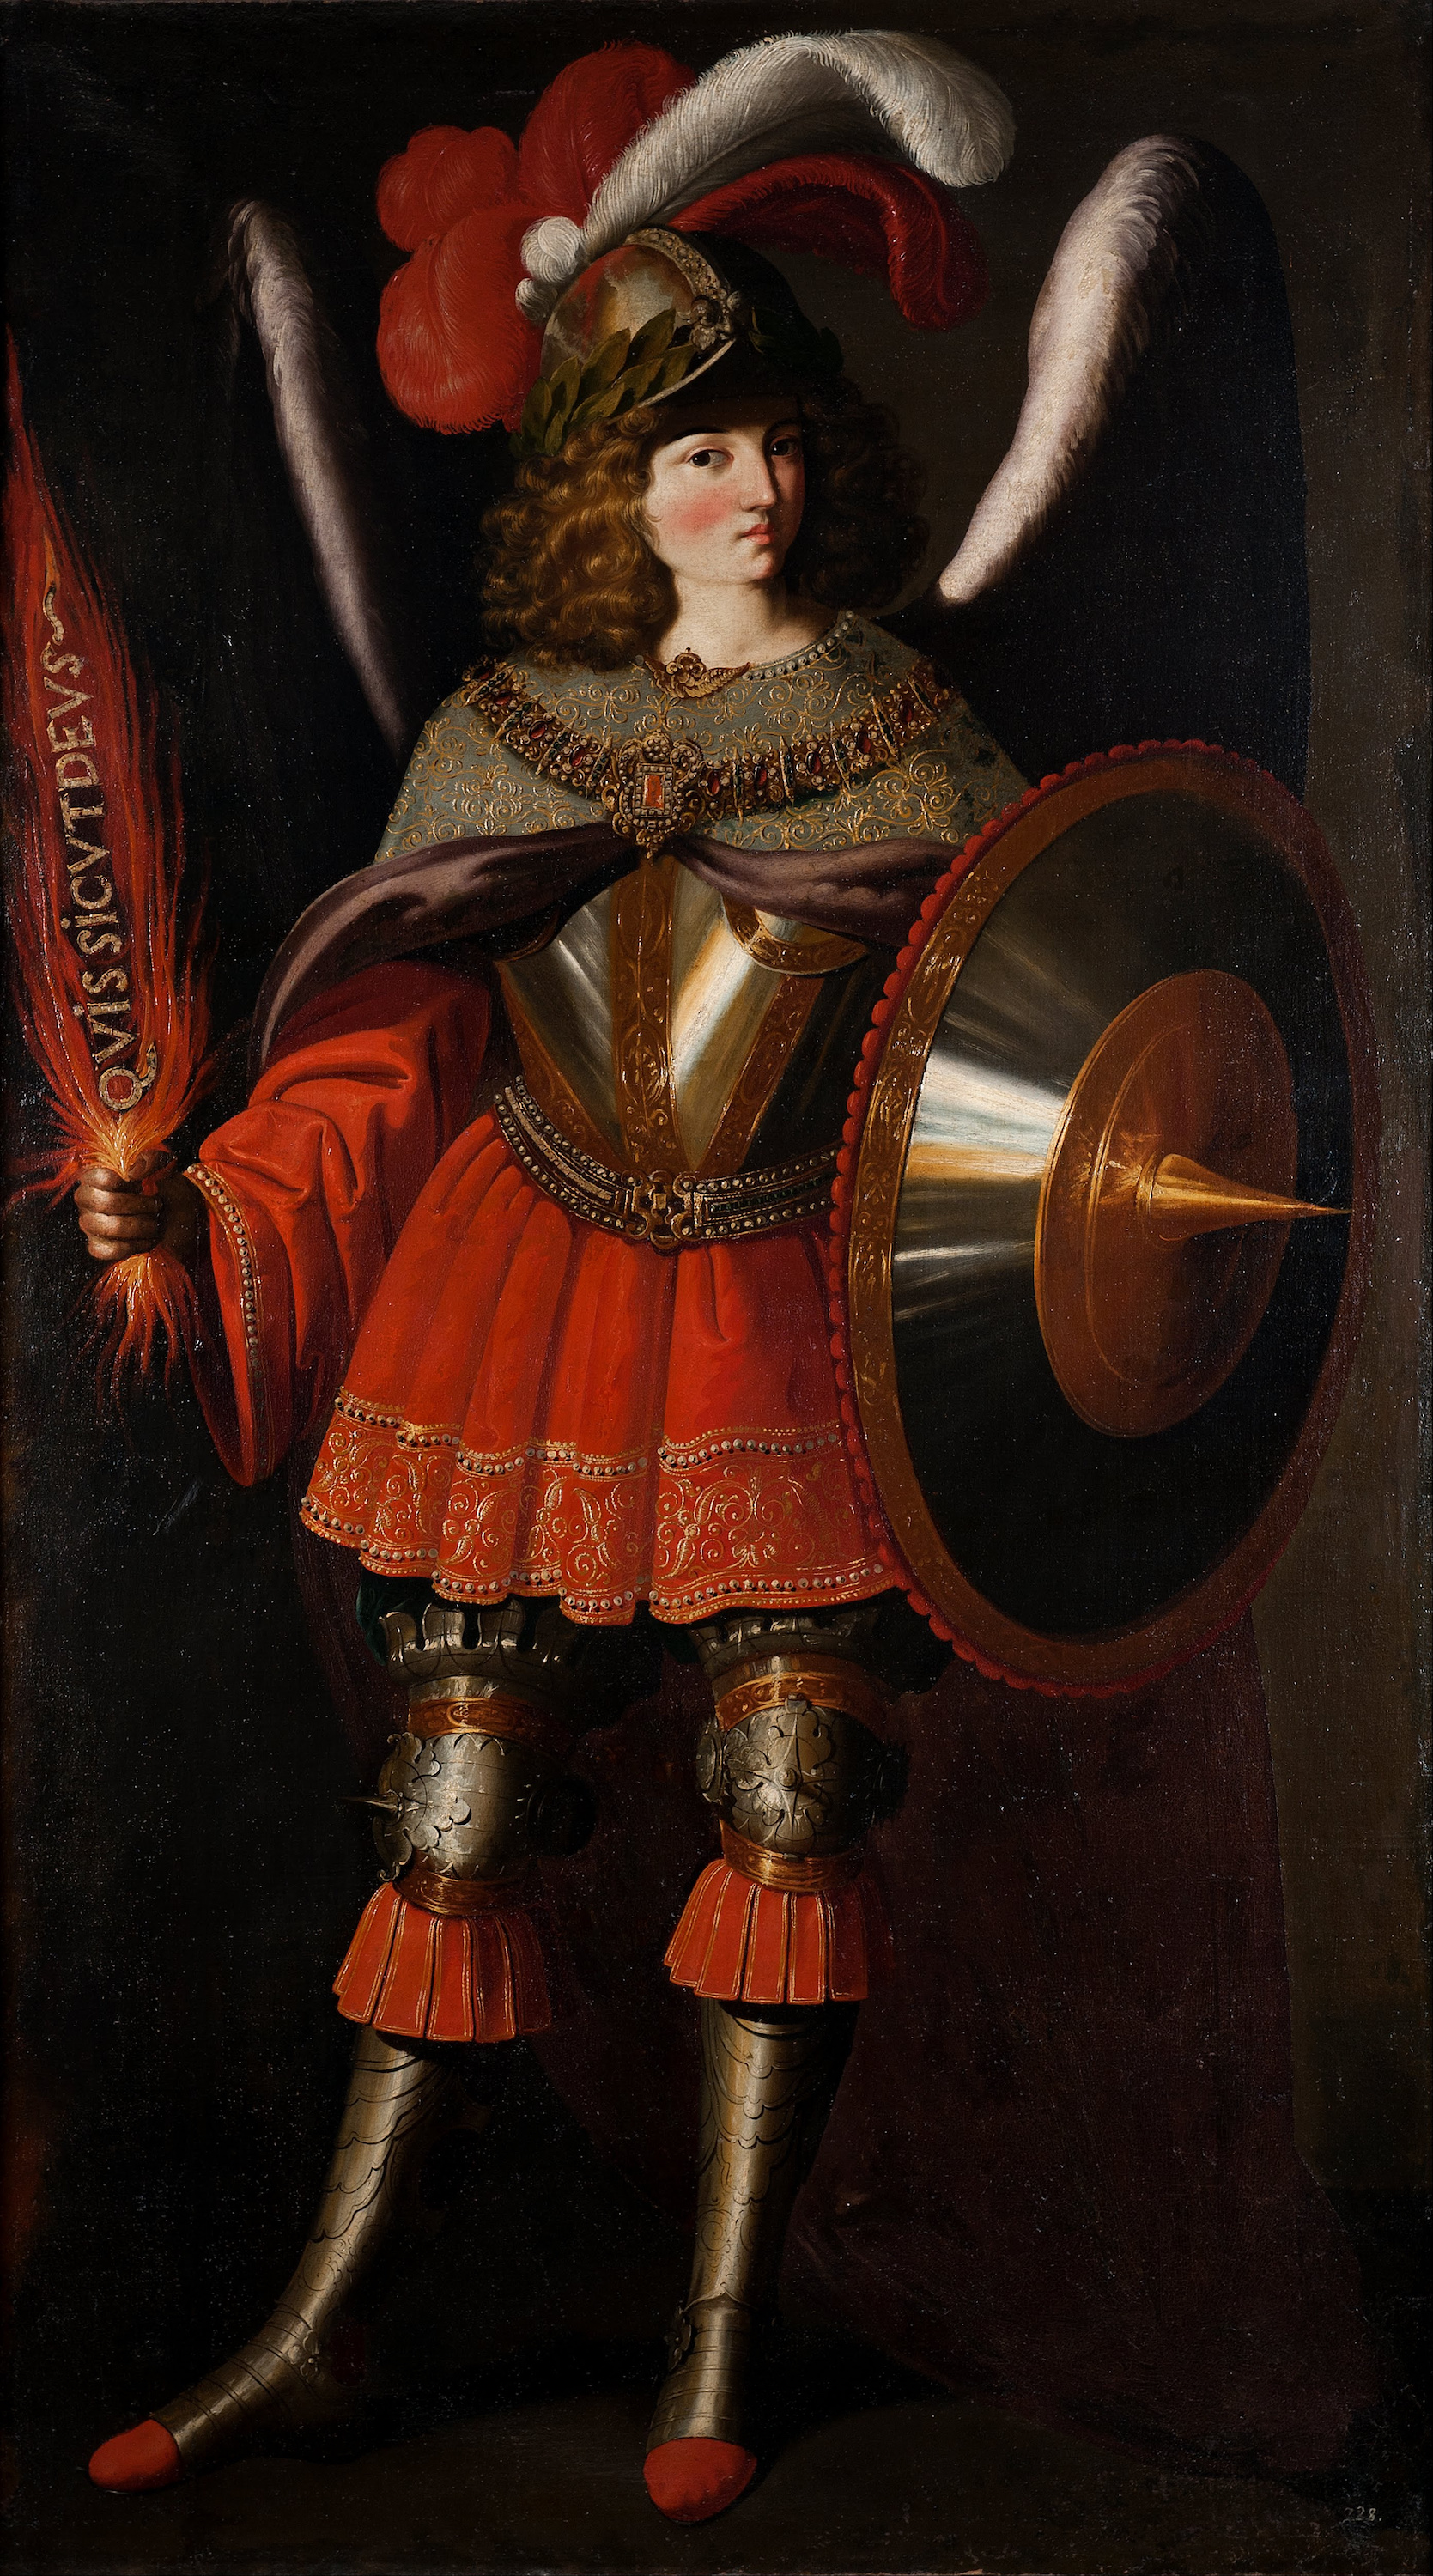 Archanděl Michael by Francisco de Zurbarán - 1598 - 1664 - 126 x 224 cm 